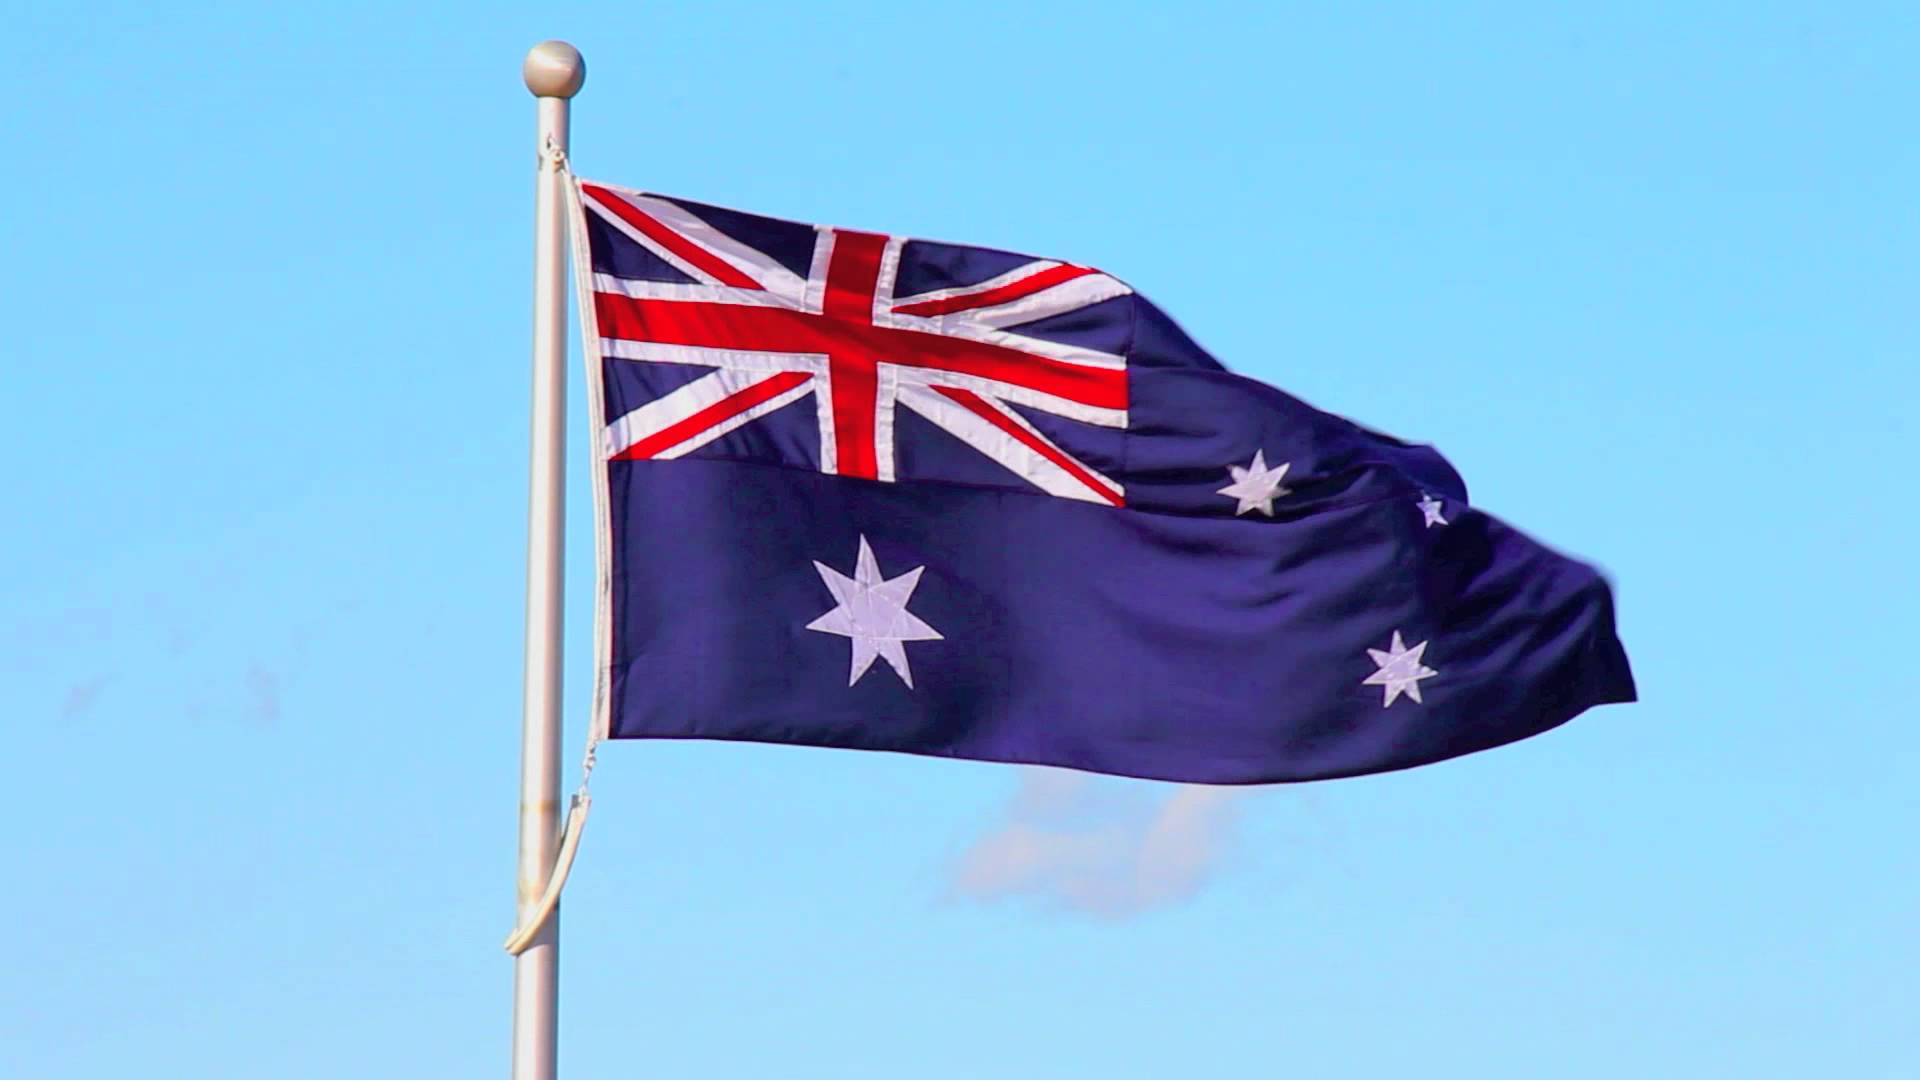 Flag Of Australia wallpaper, Misc, HQ Flag Of Australia picture